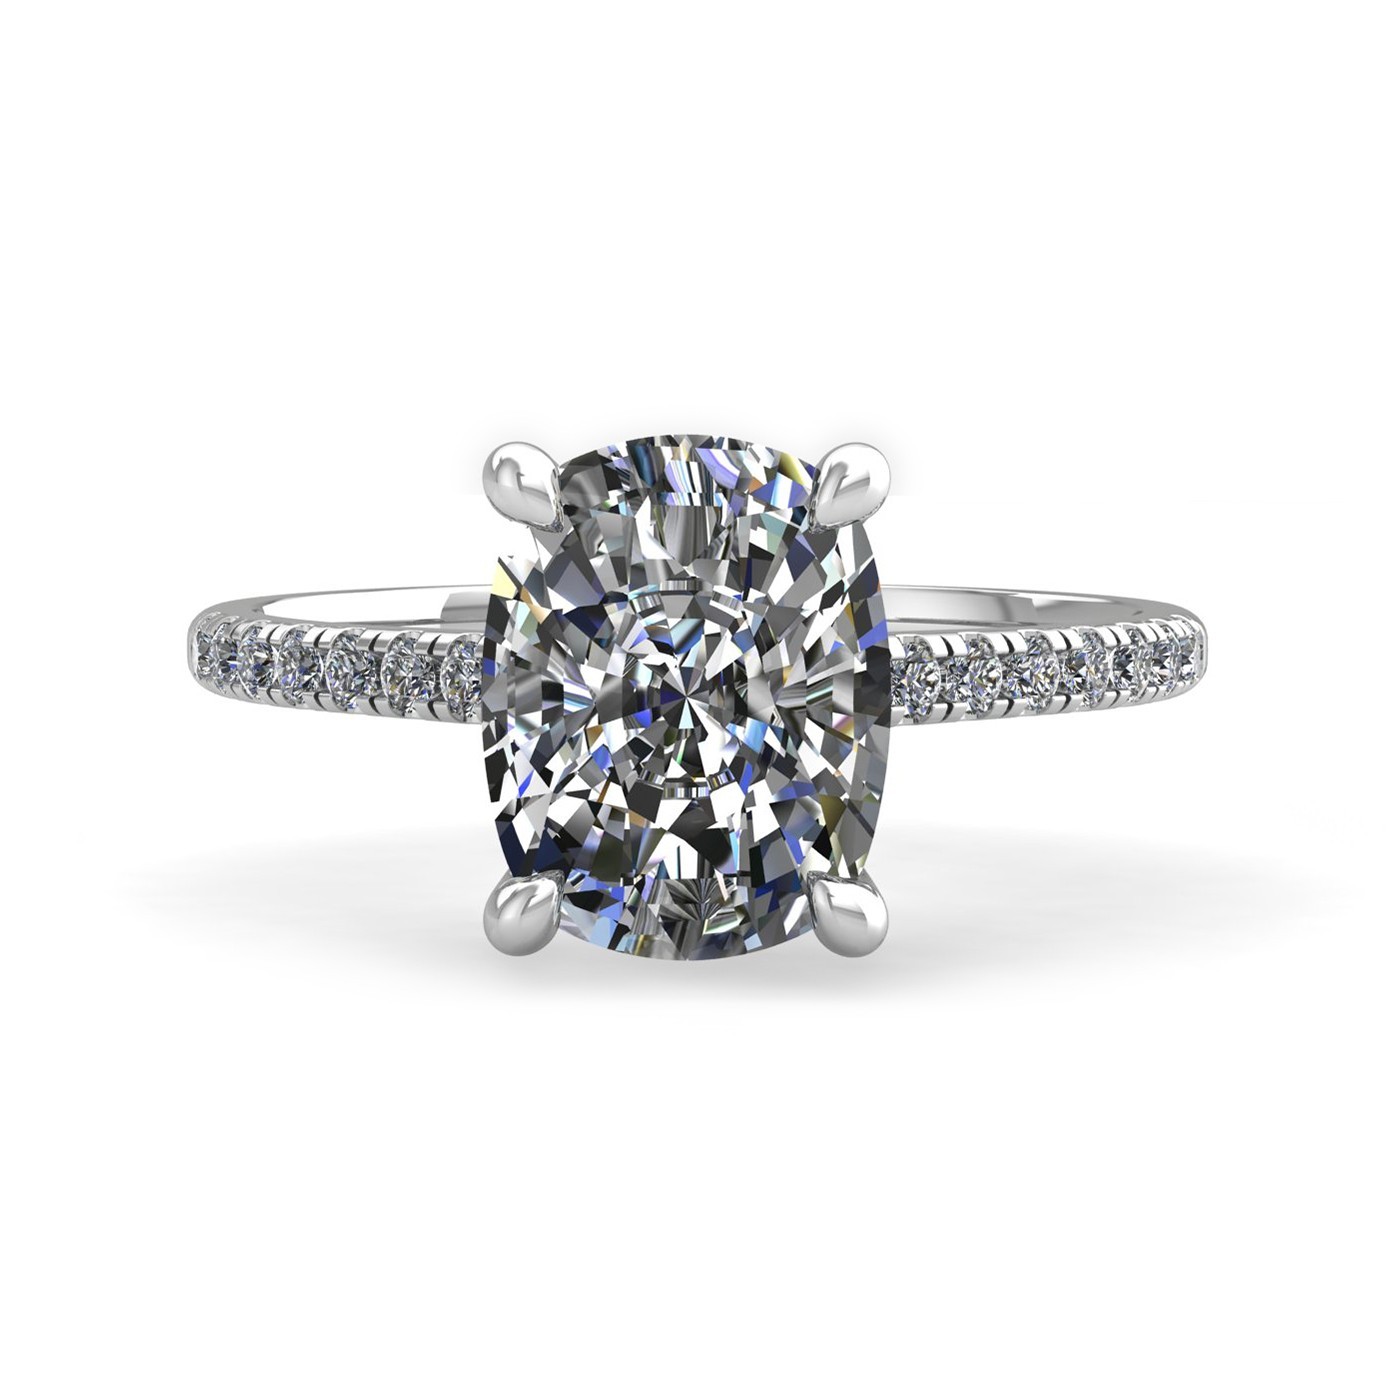 18k white gold  4 prongs elongated cushion cut diamond engagement ring with whisper thin pavÉ set band Photos & images